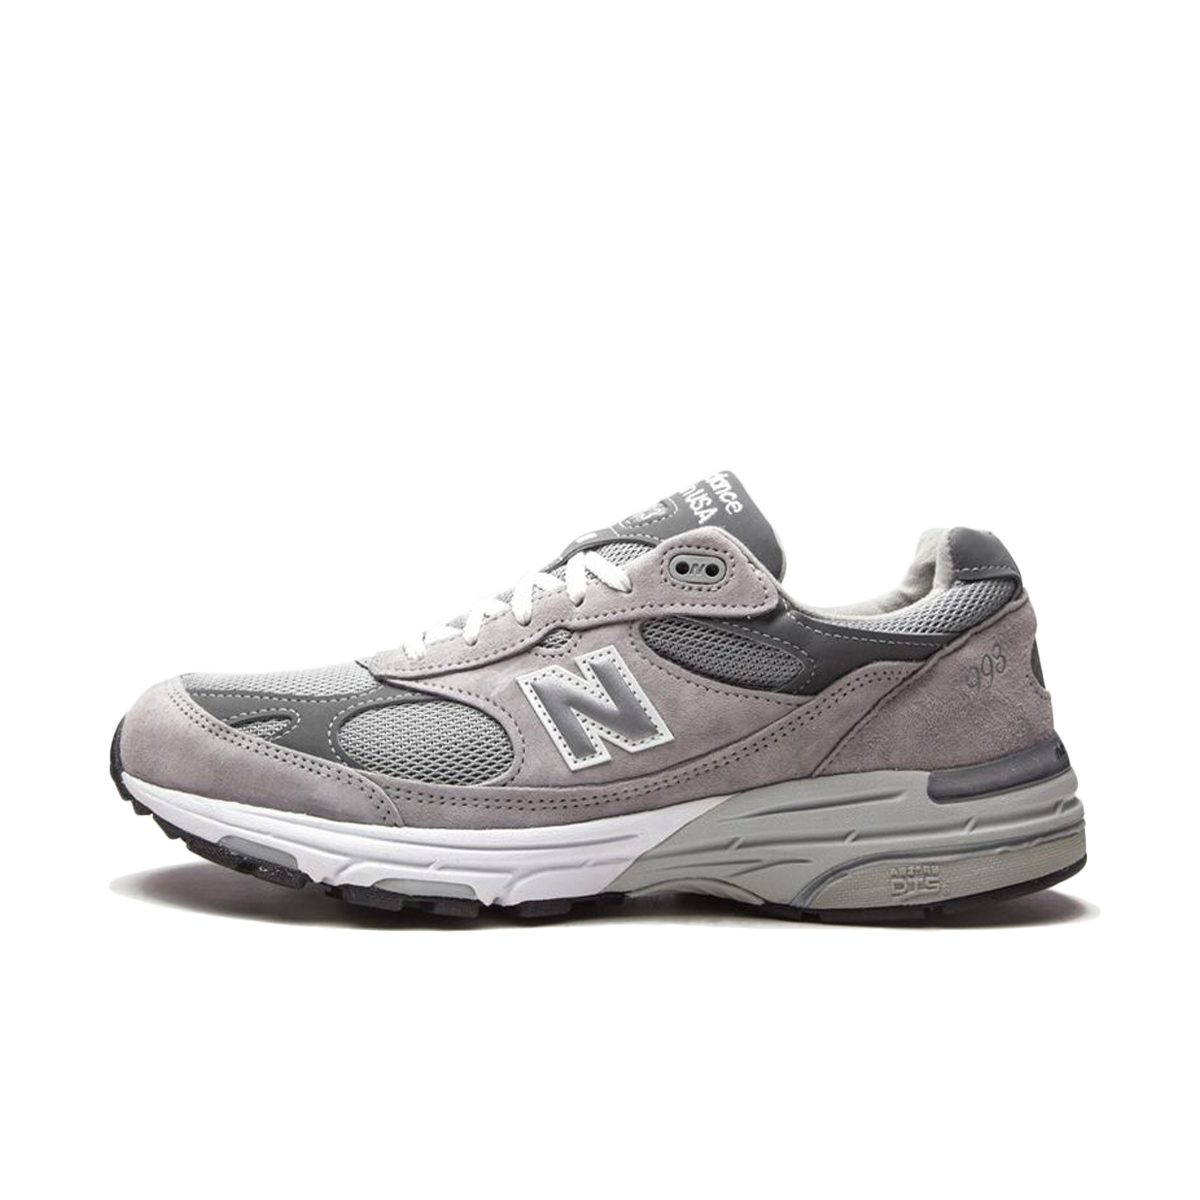 New Balance 993 "Grey' MR993GL